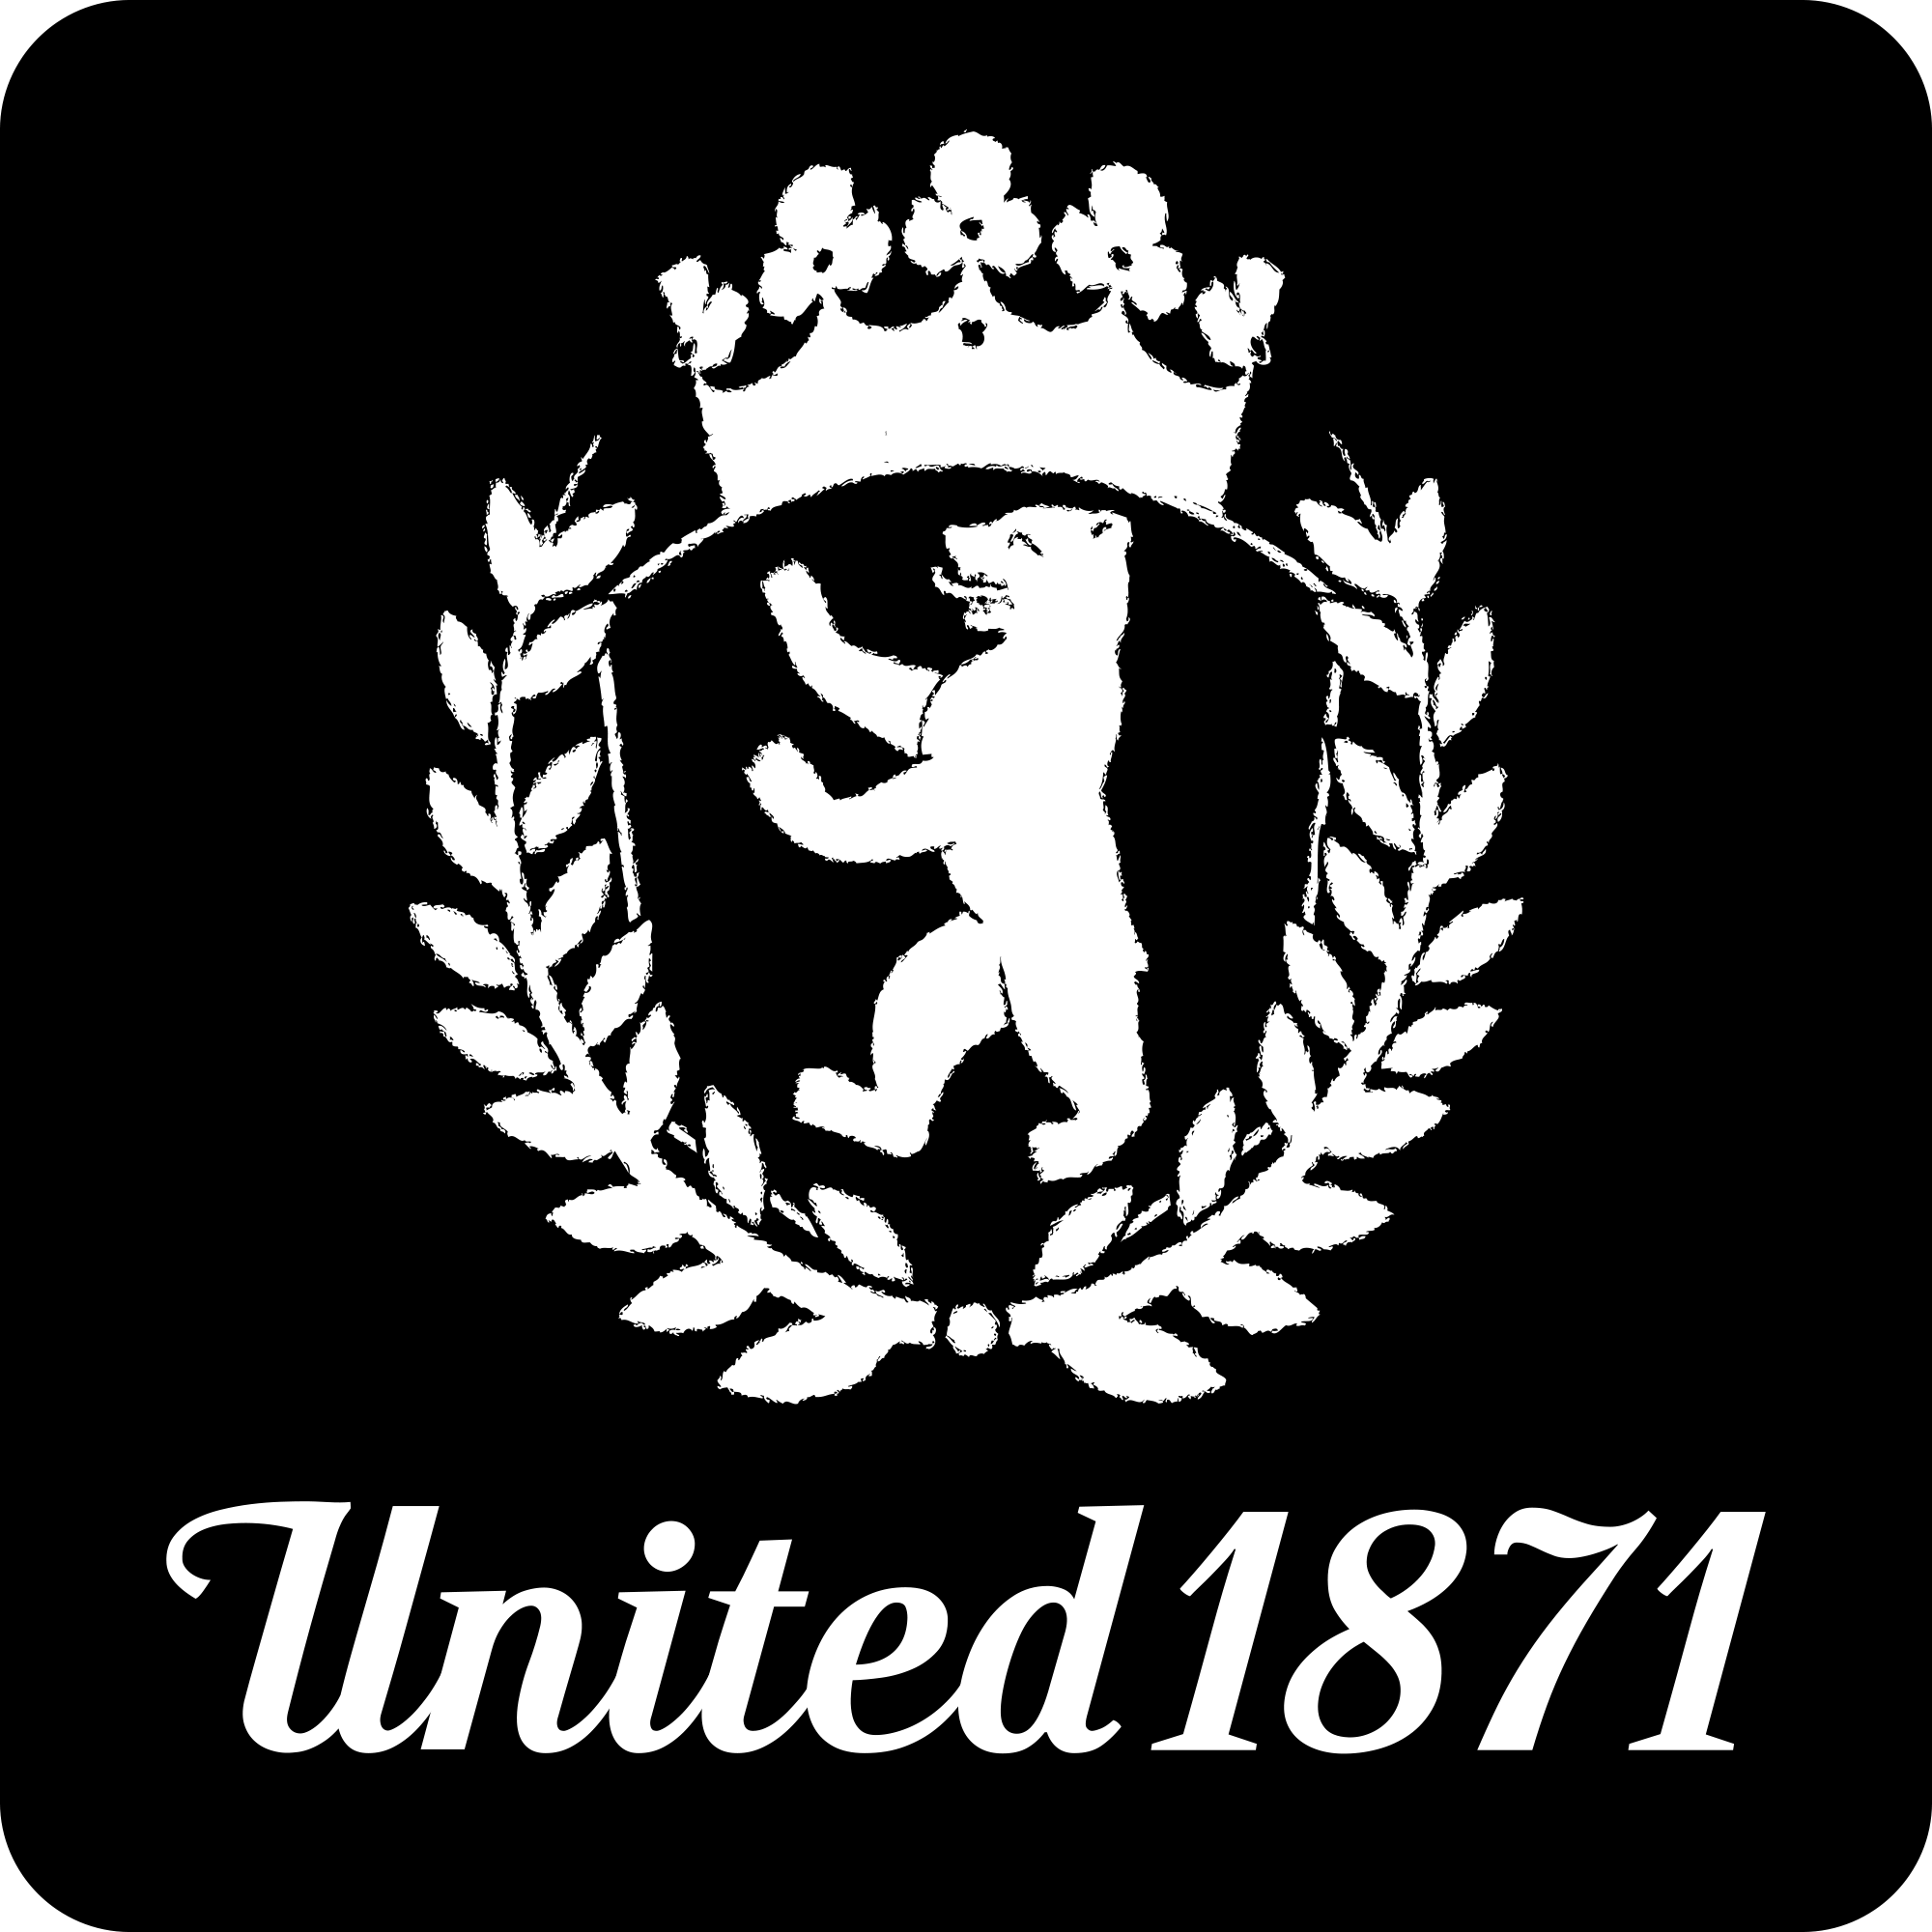 United1871